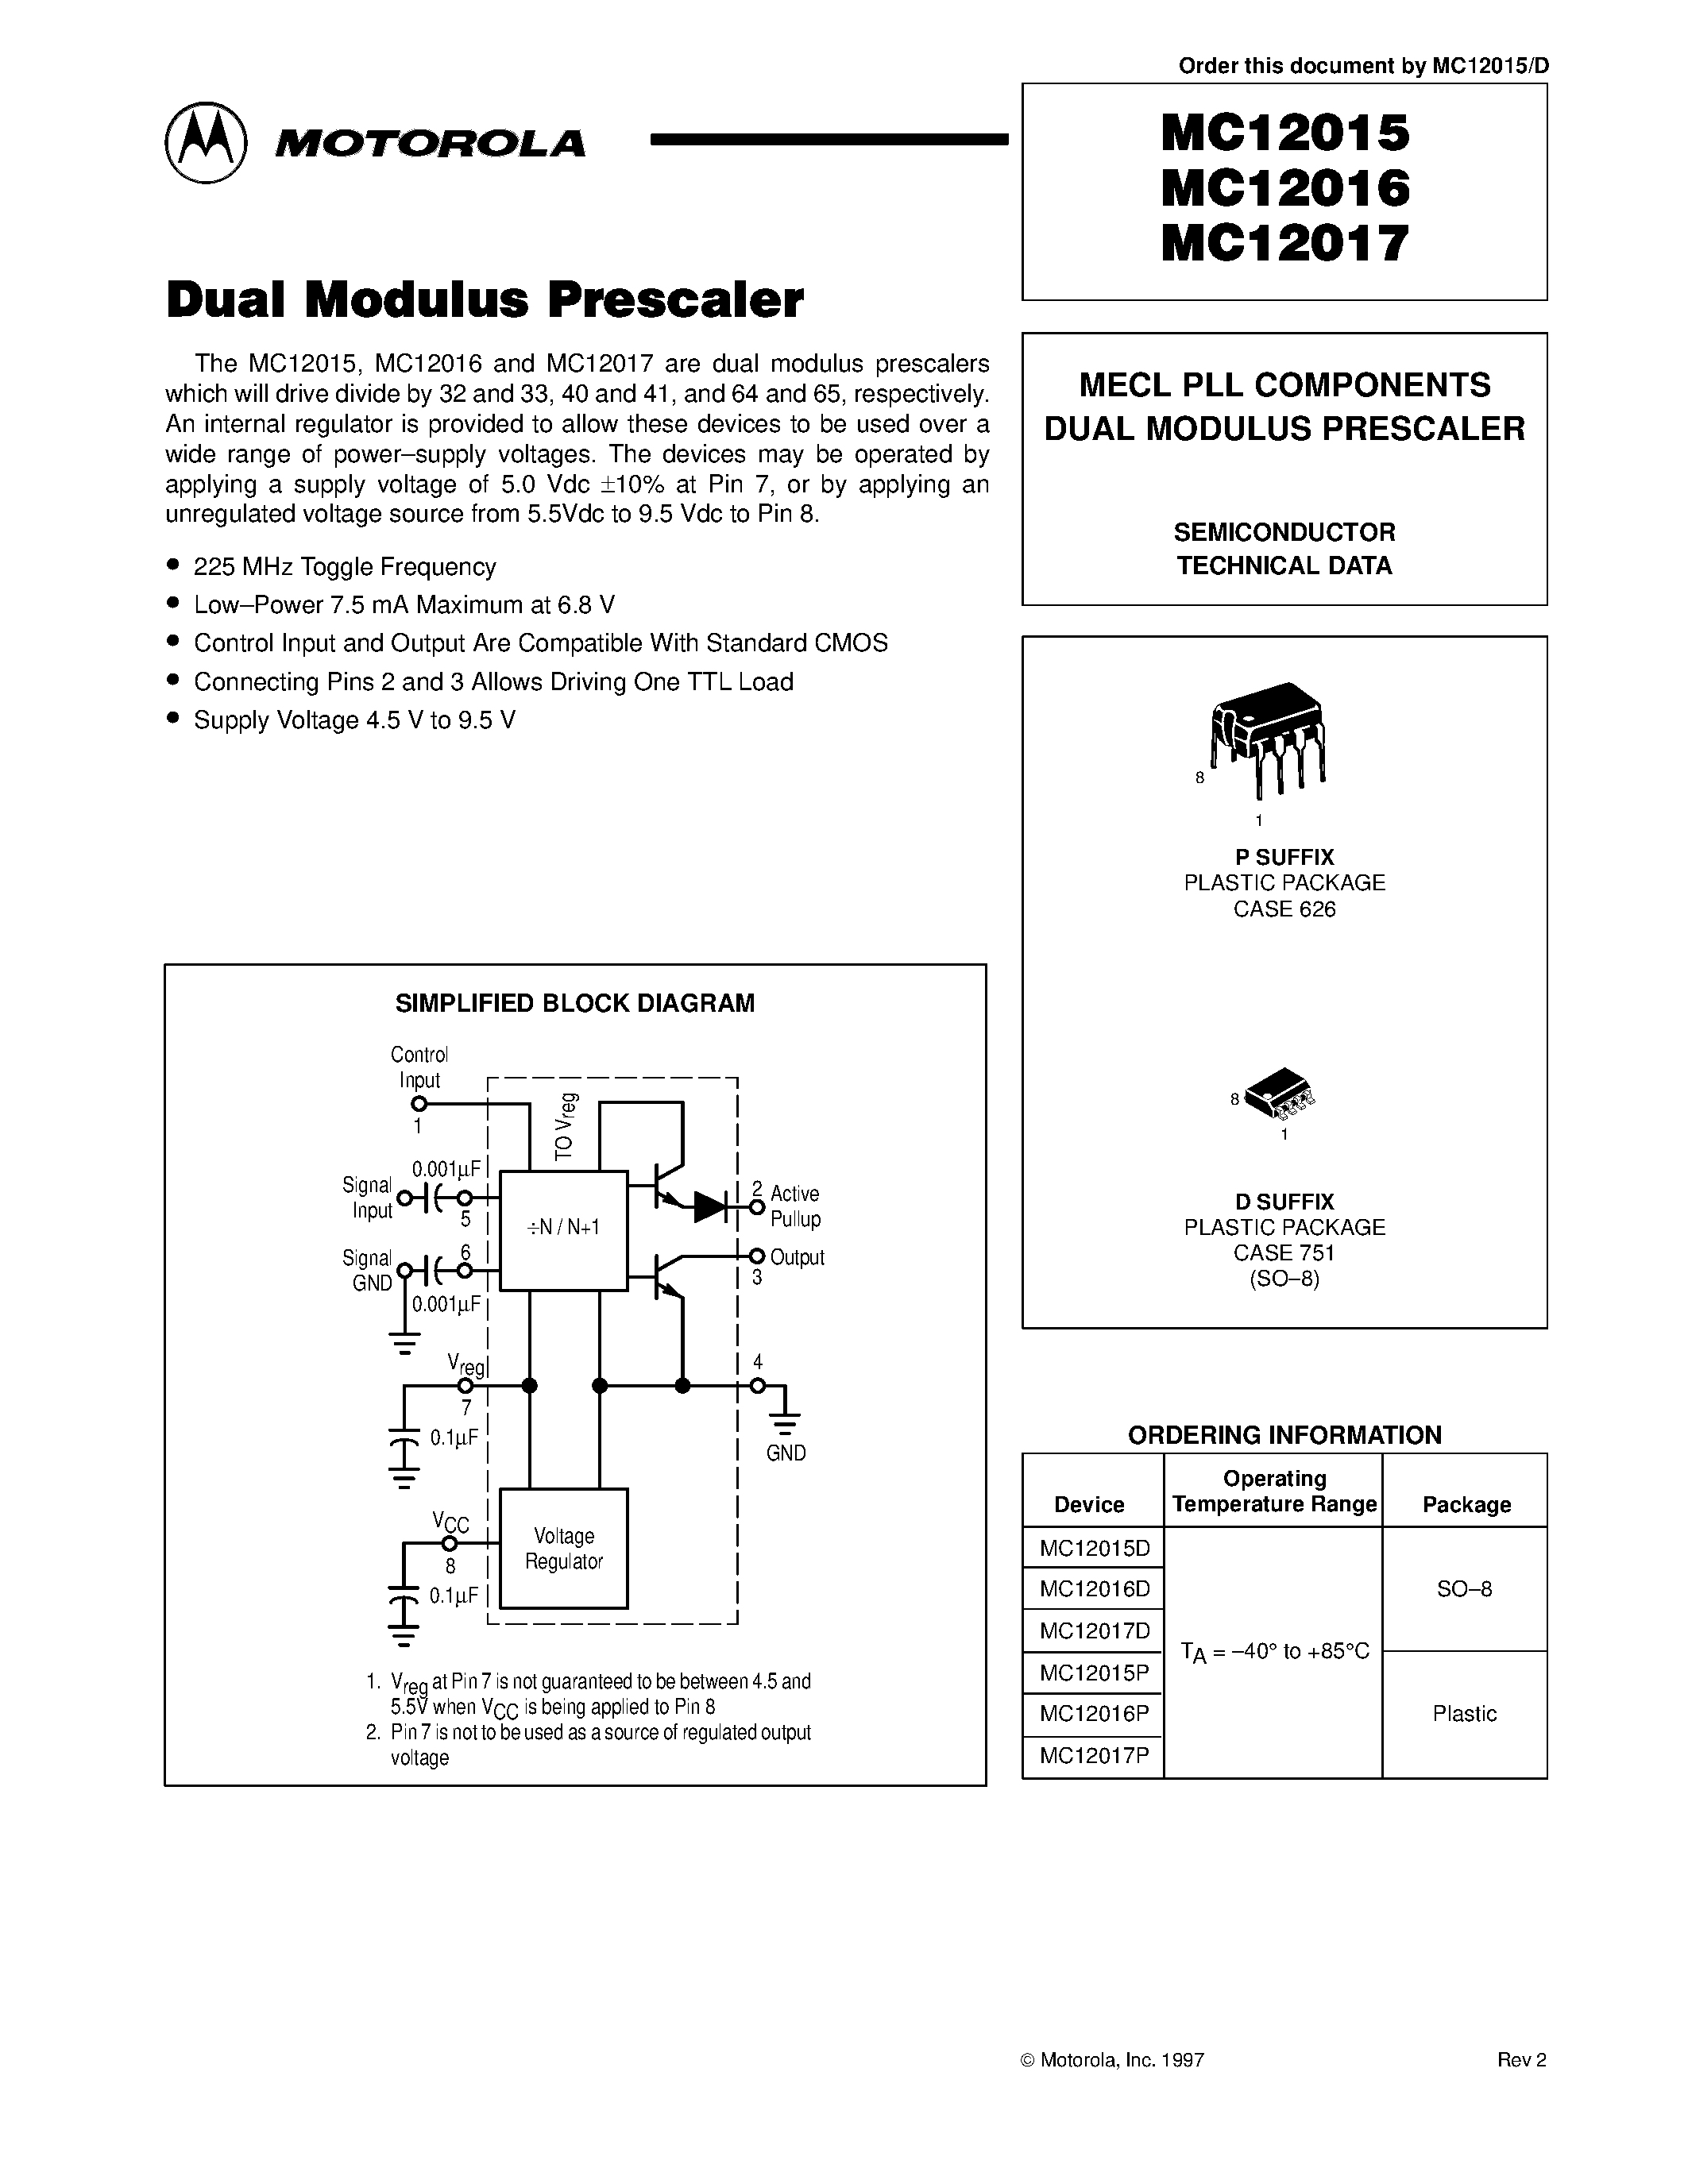 Даташит MC12017P - MECL PLL COMPONENTS DUAL MODULUS PRESCALER страница 1